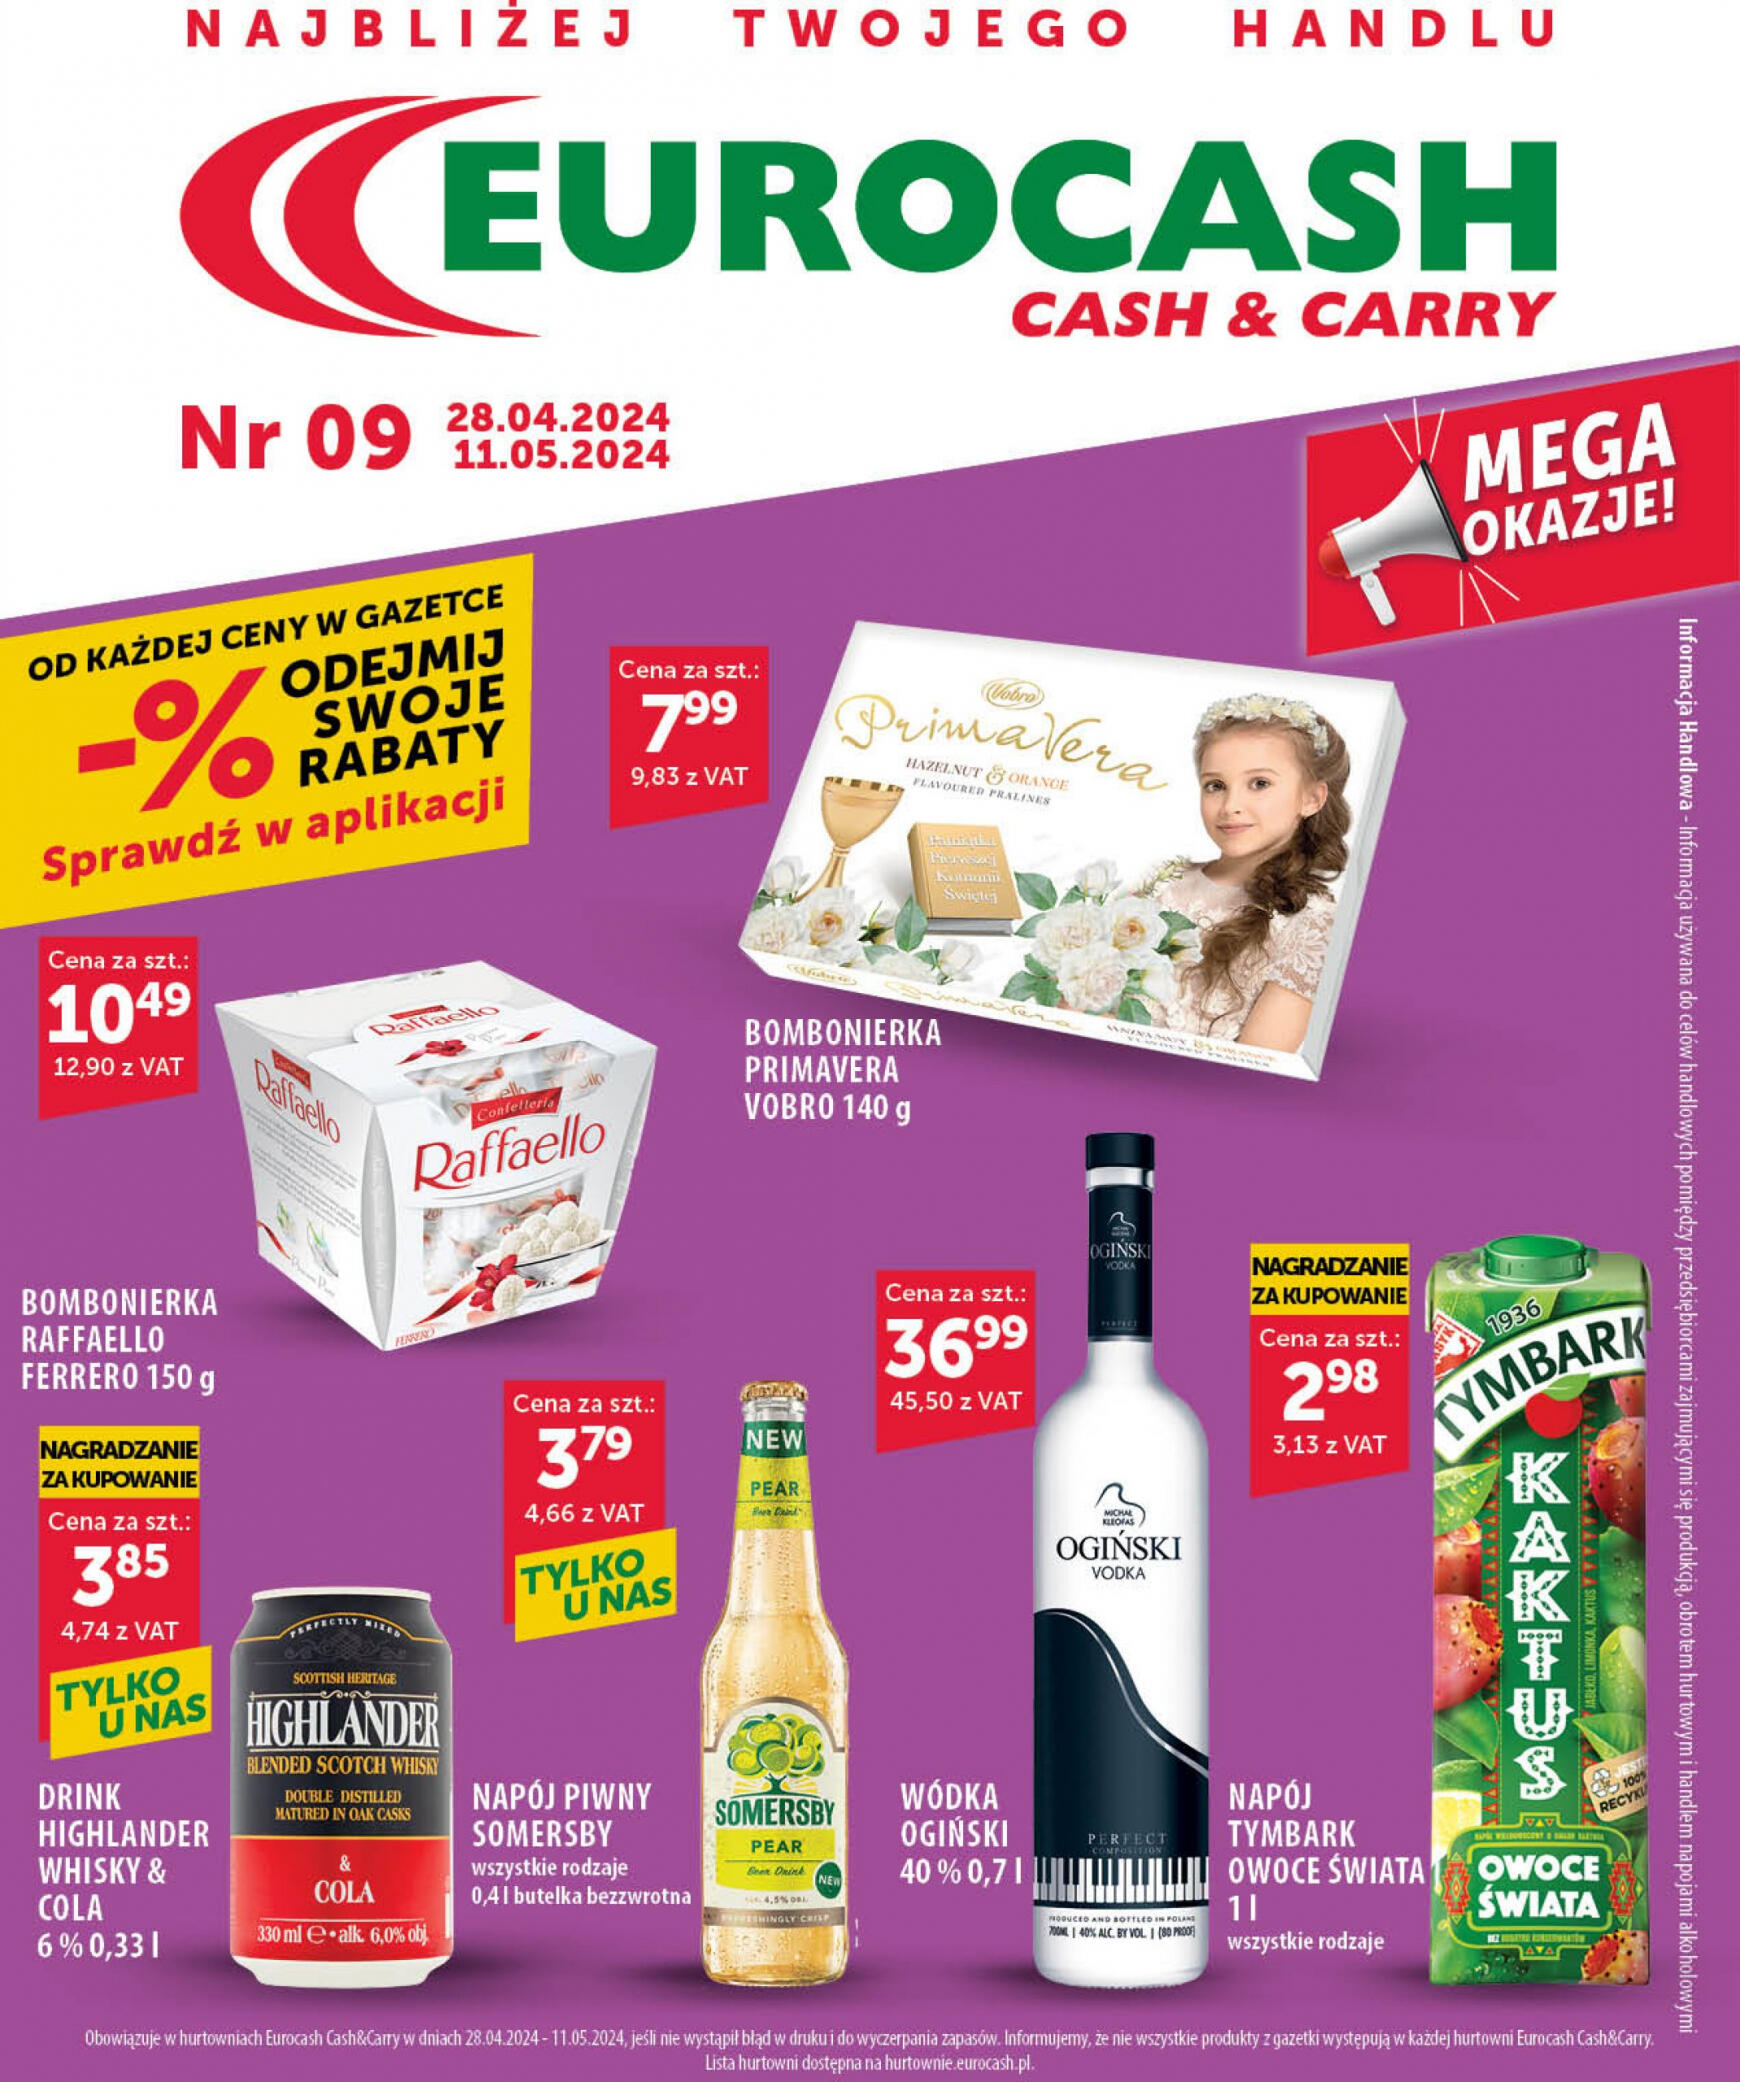 eurocash - Eurocash - Gazetka Cash&Carry gazetka aktualna ważna od 28.04. - 11.05. - page: 1